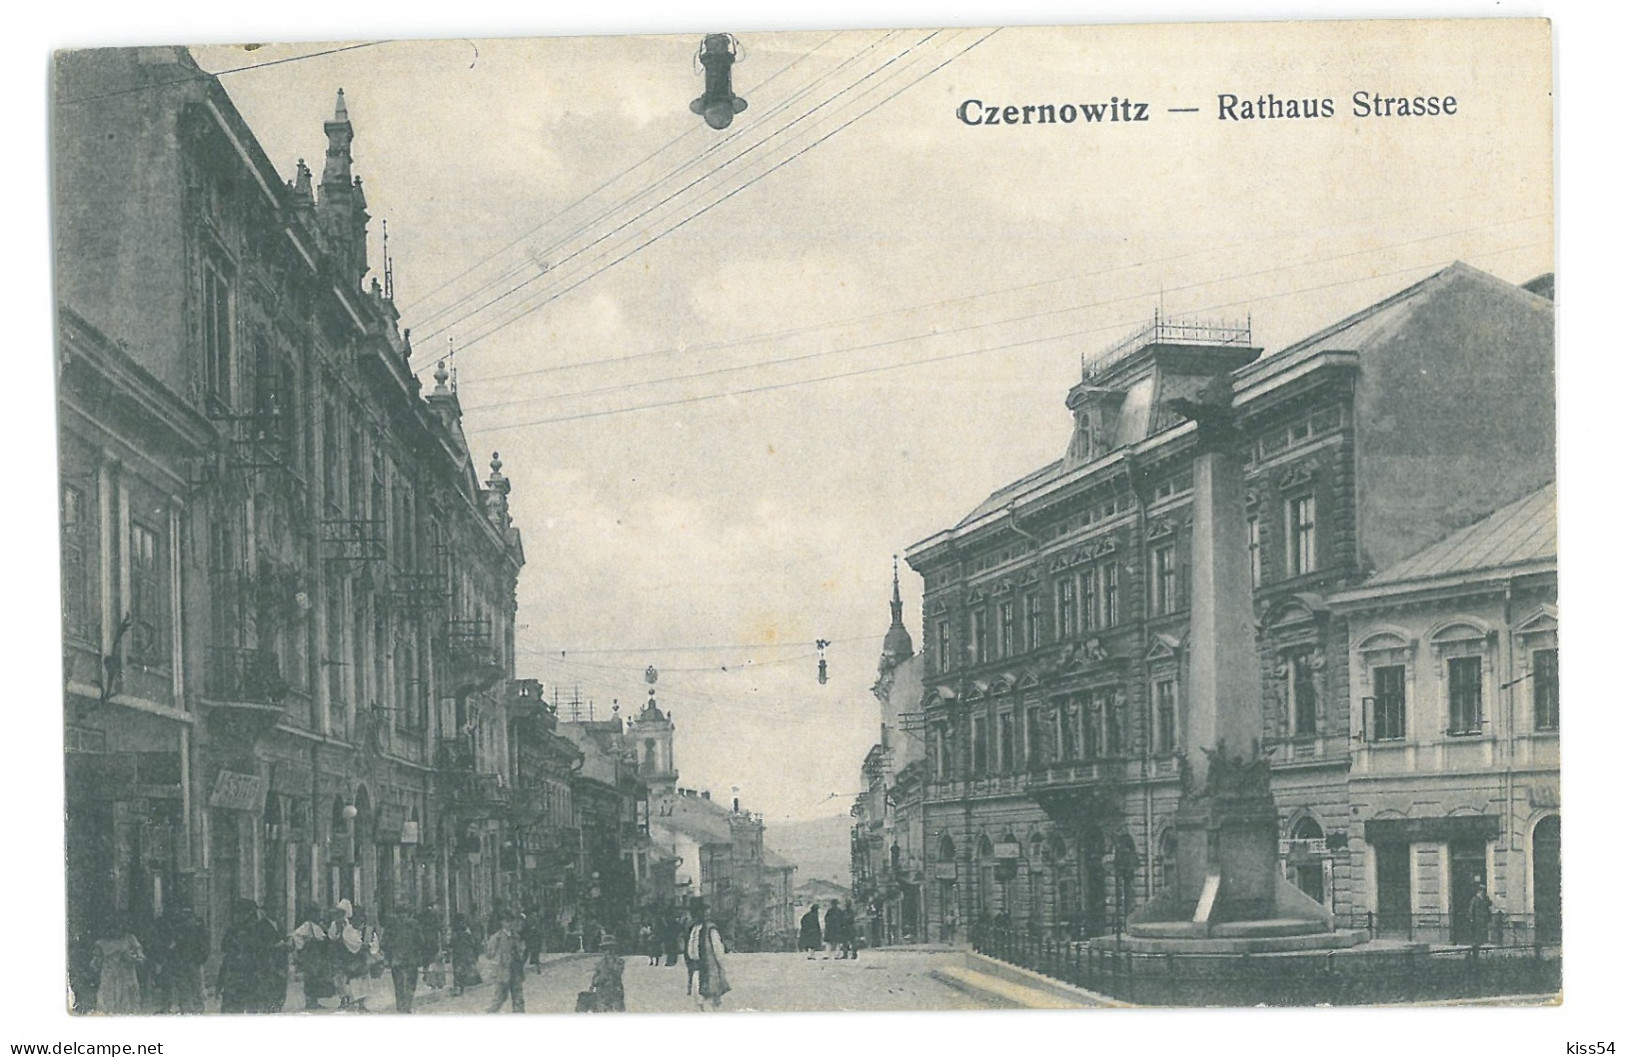 UK 23 - 17361 CZERNOWITZ, Street Stores, Ukraine - Old Postcard, CENSOR - Used - 1915 - Ukraine